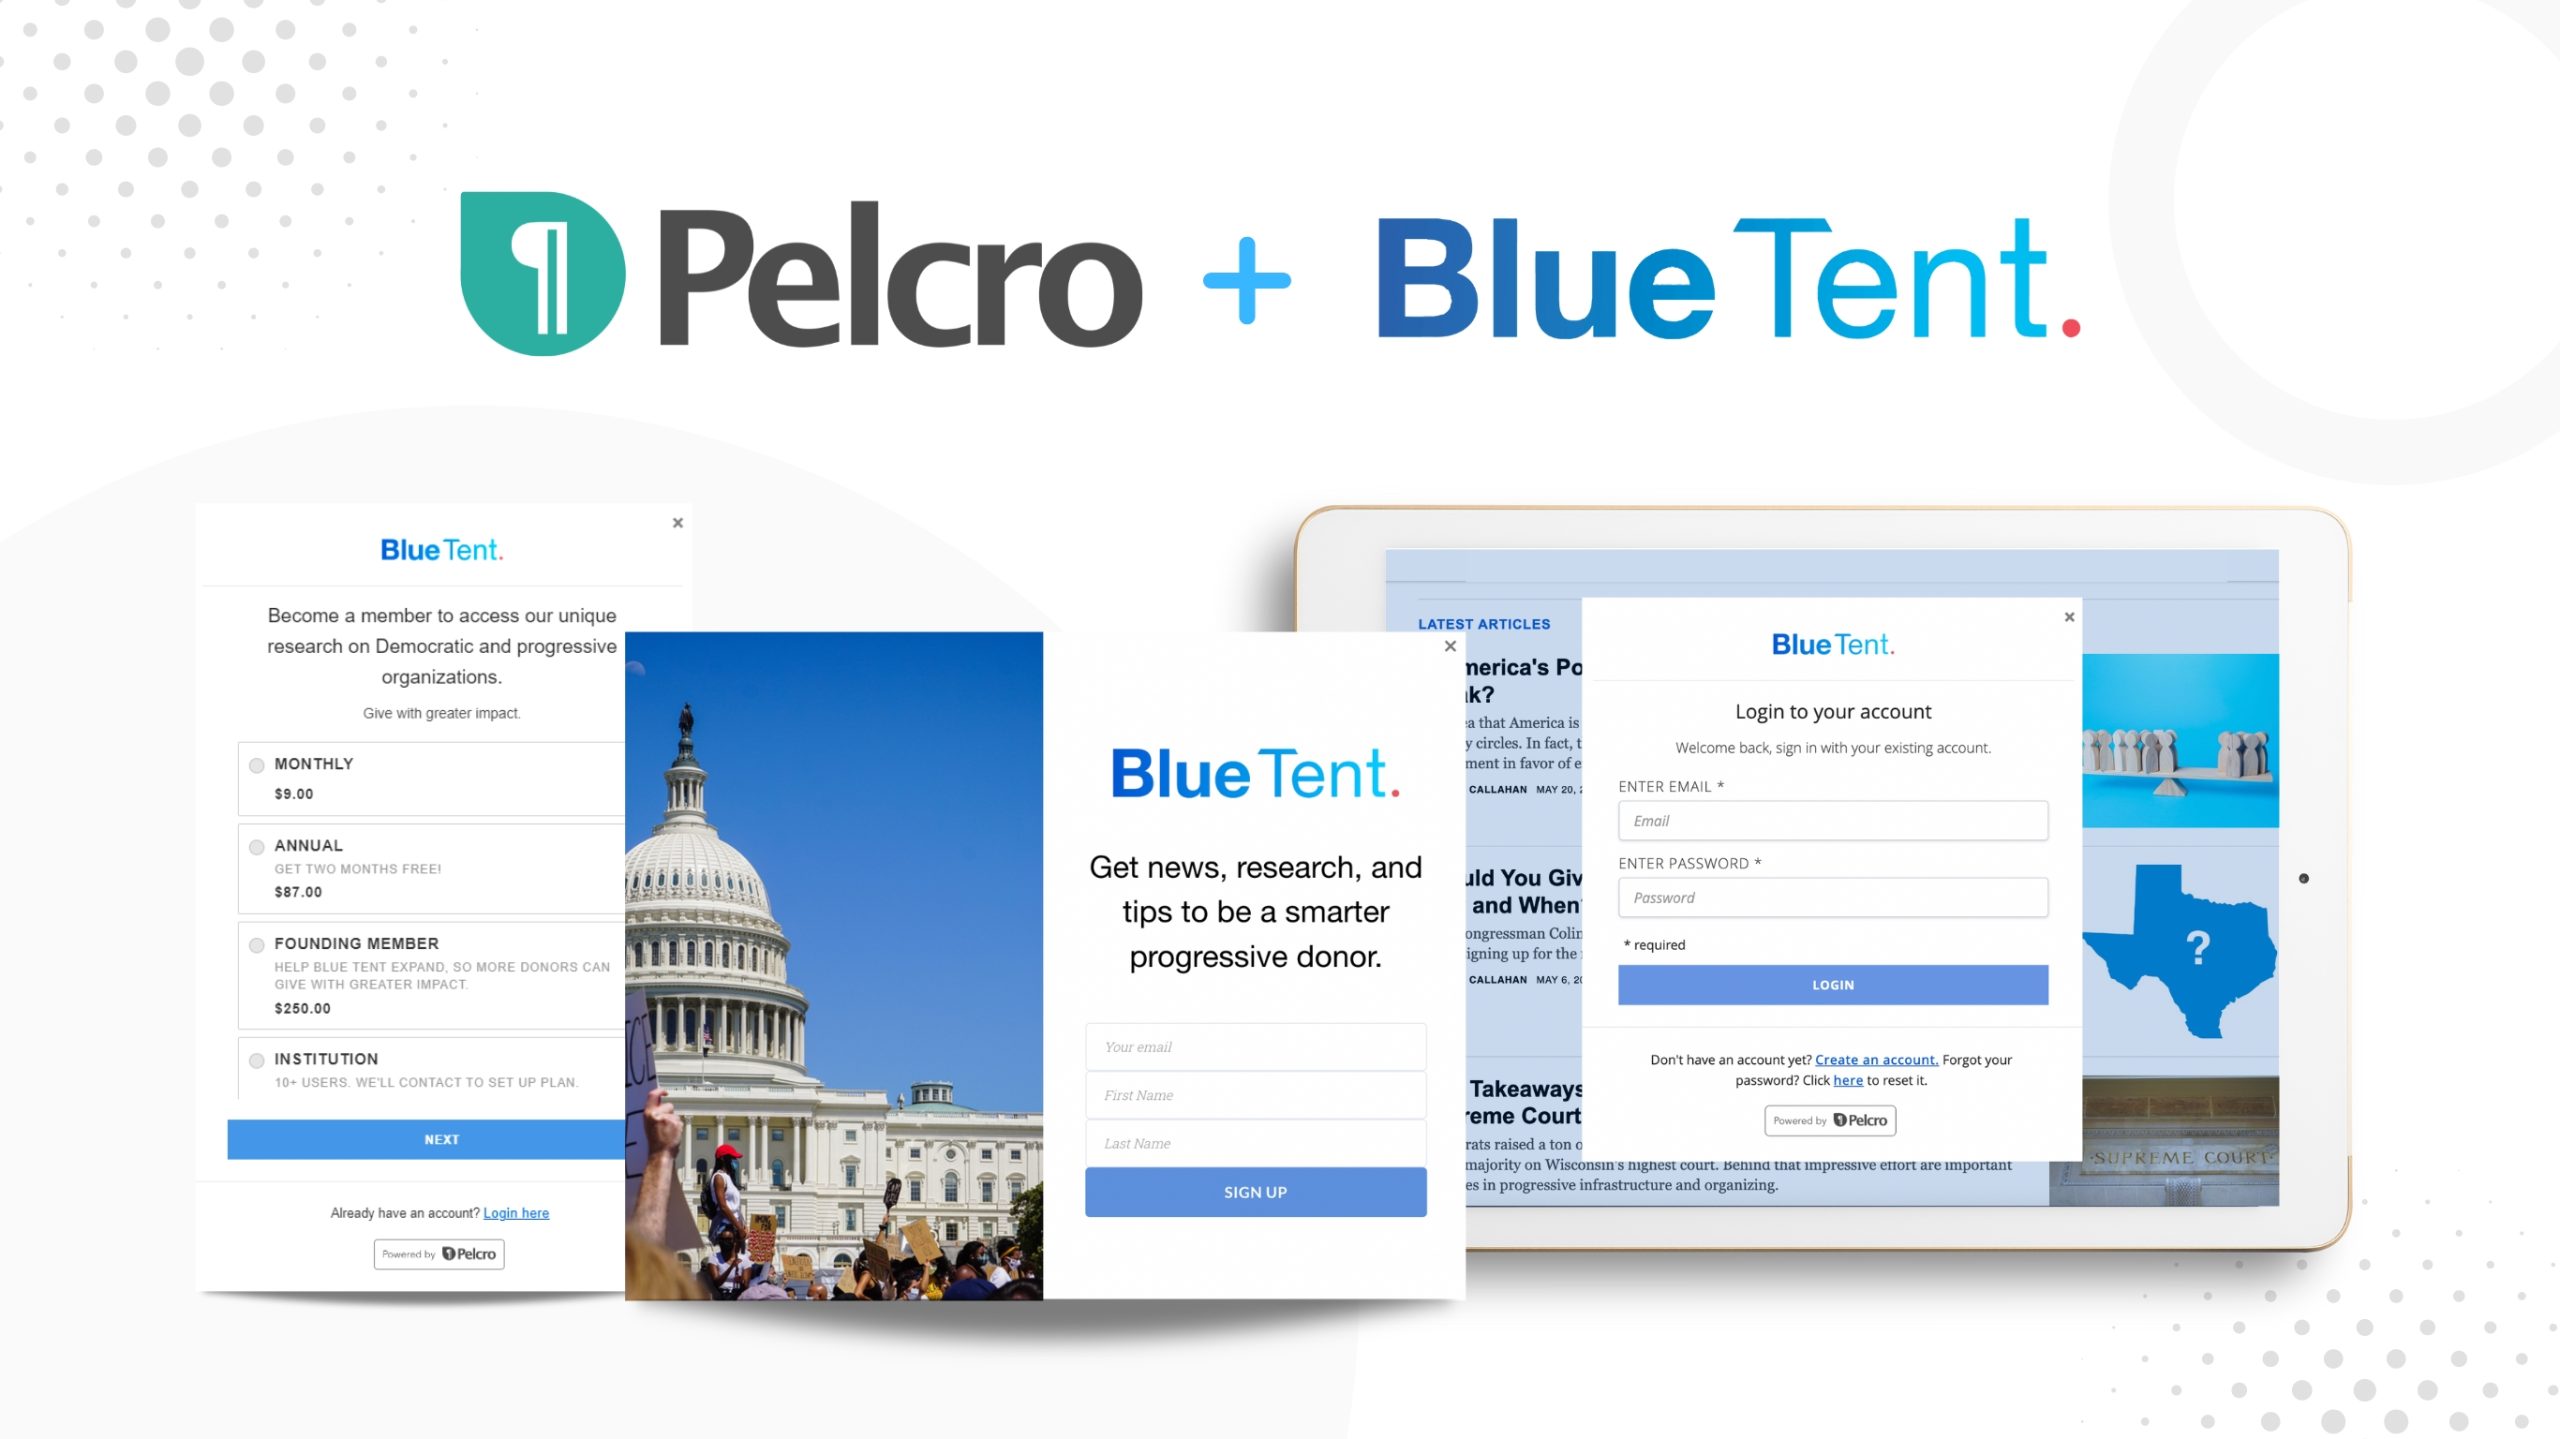 Pelcro+ Blue Tent partnership